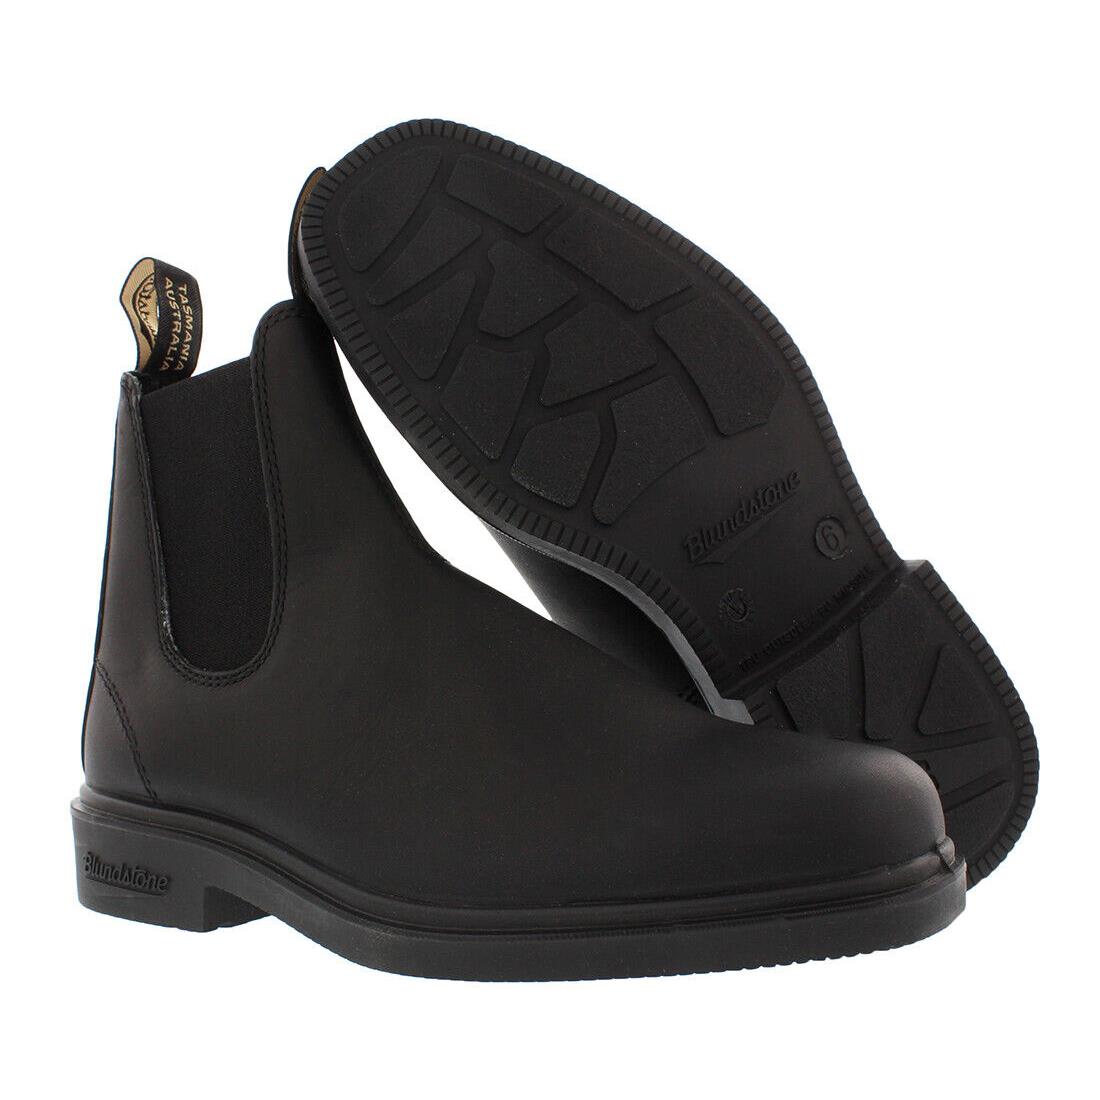 Blundstone Dress Boot Premium Leather Unisex Shoes